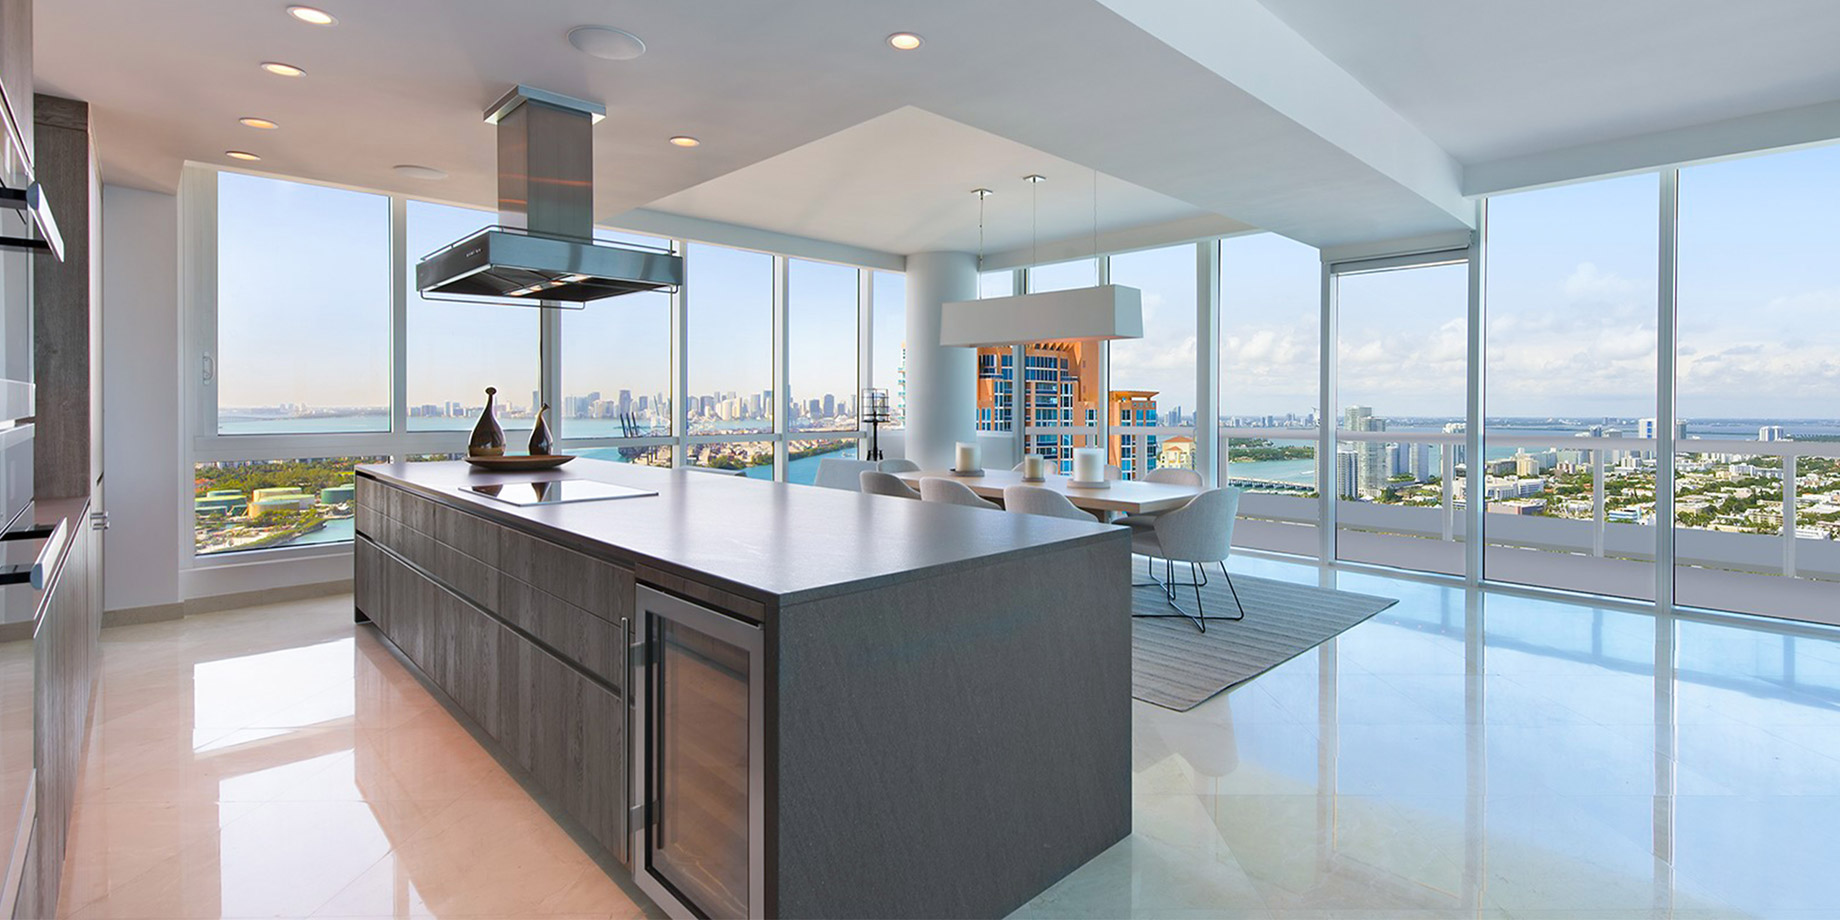 Kitchen and Living Room - Continuum Luxury Condos - South Beach, Miami, Florida